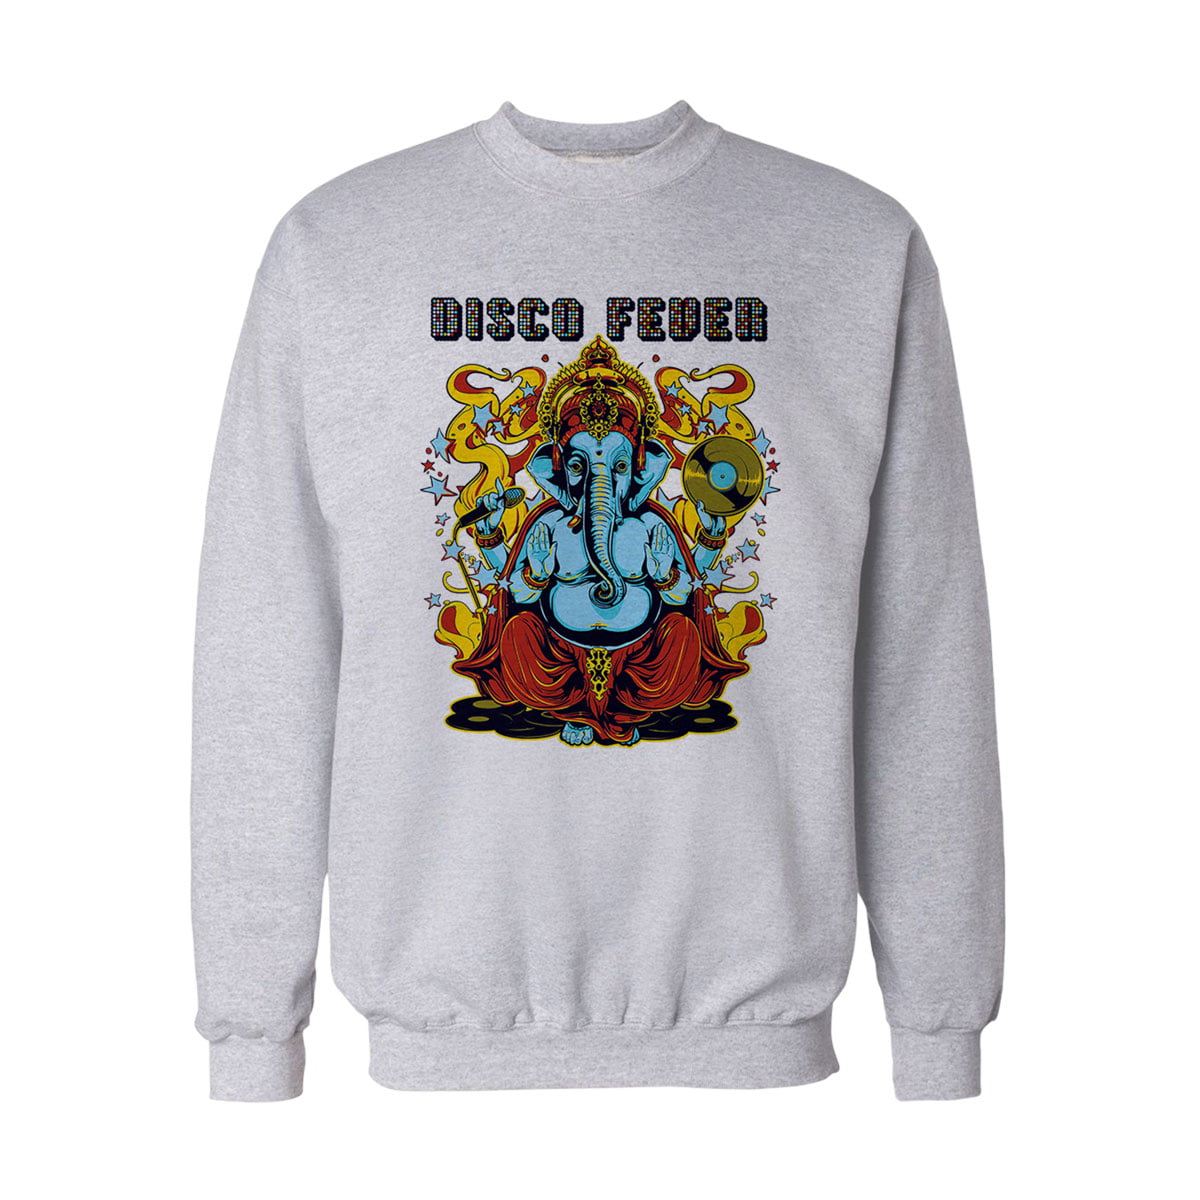 Disco forever fil sweatshirt b - disco fever fil tasarımlı sweatshirt - figurex